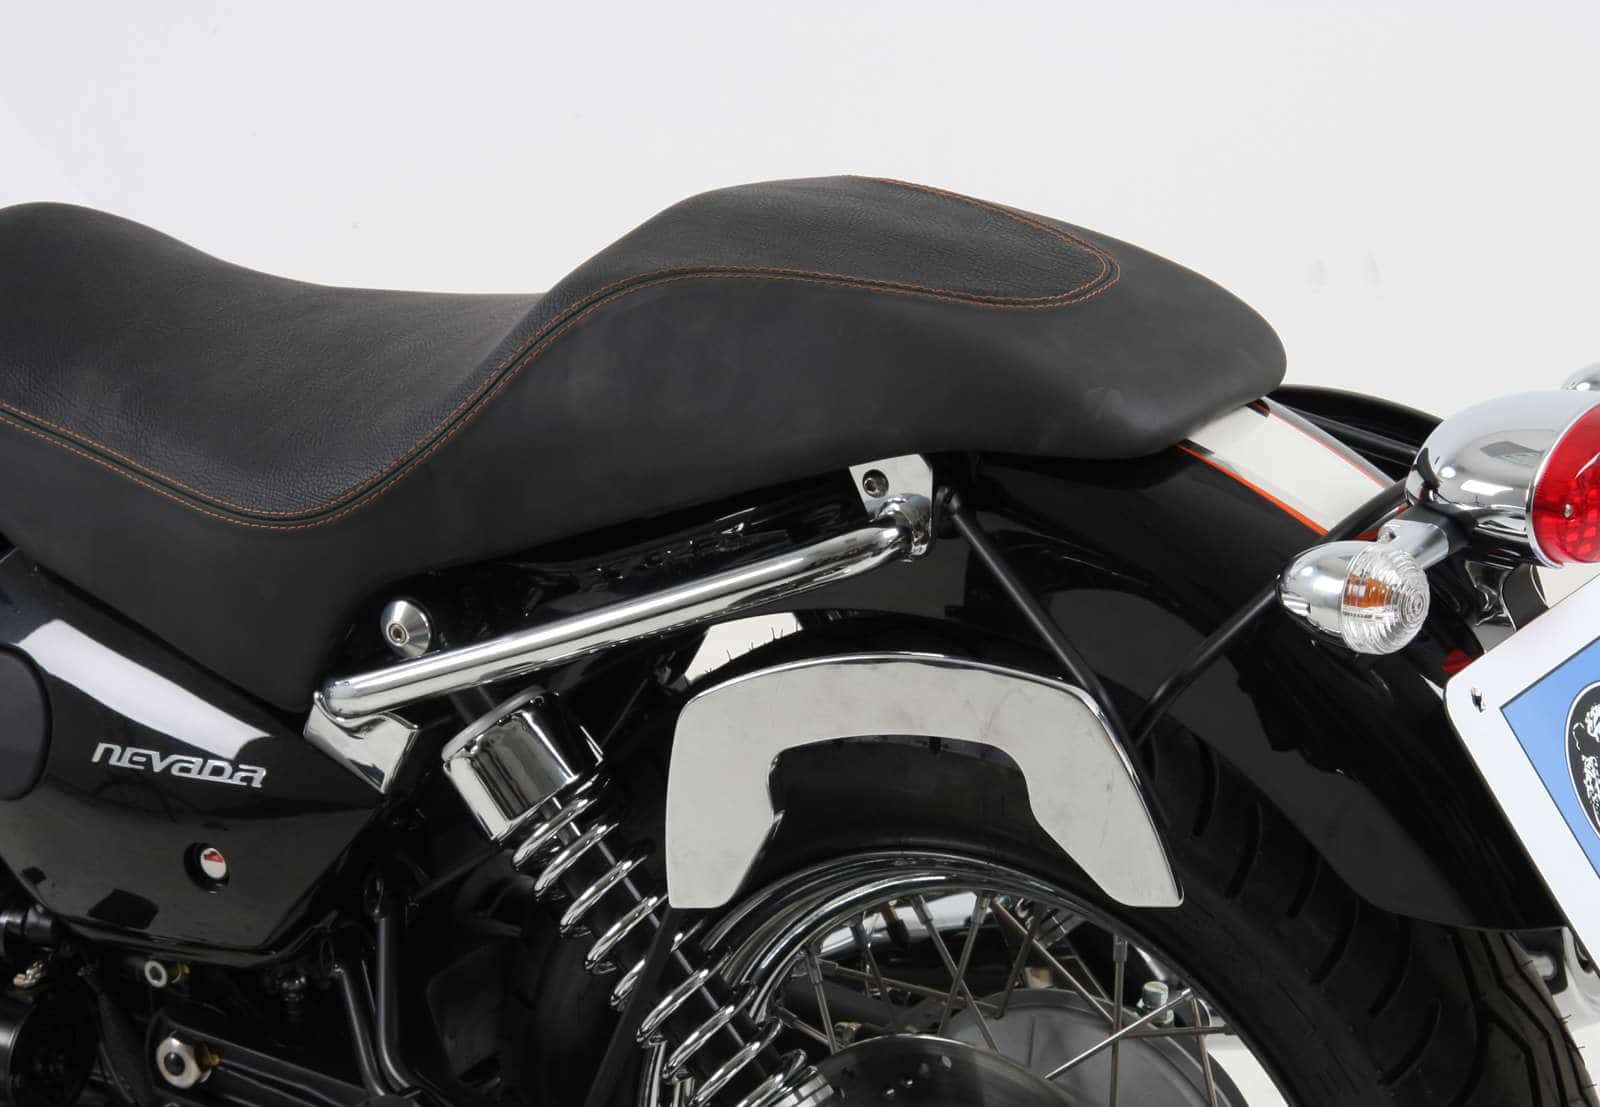 C-Bow sidecarrier chrome for Moto Guzzi Nevada 750 Anniversario (2010-2011)